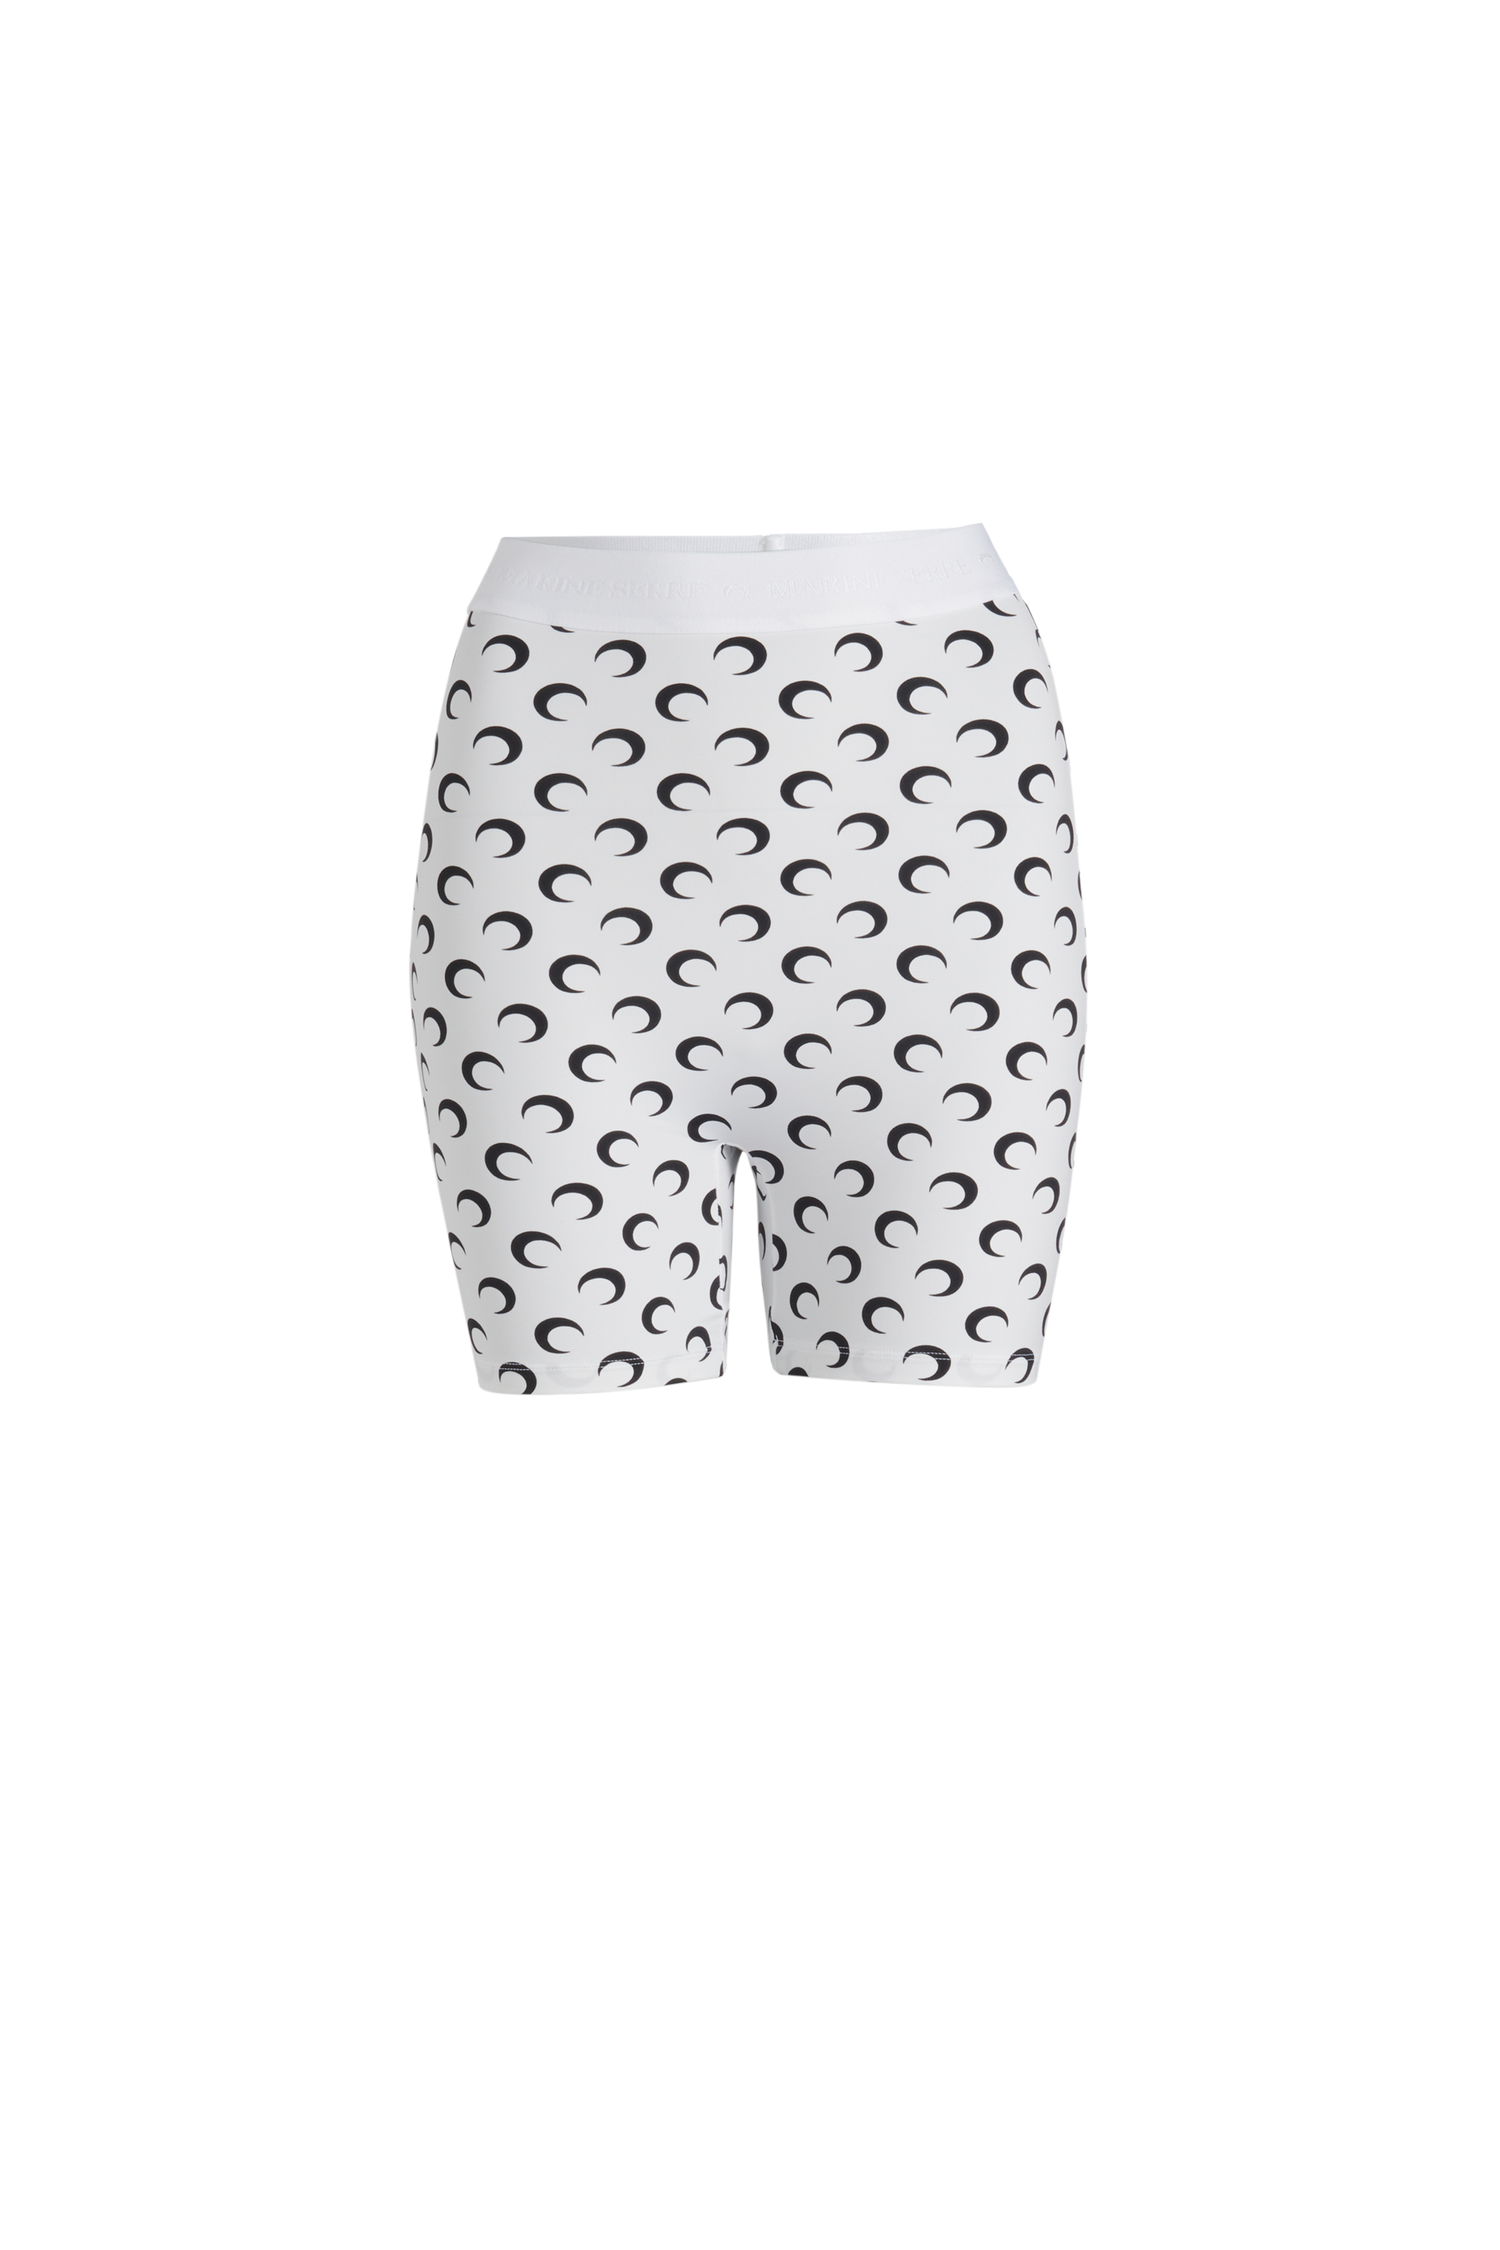 Louis Vuitton Printed Mesh Shorts w/ Tags - White, 15 Rise Shorts